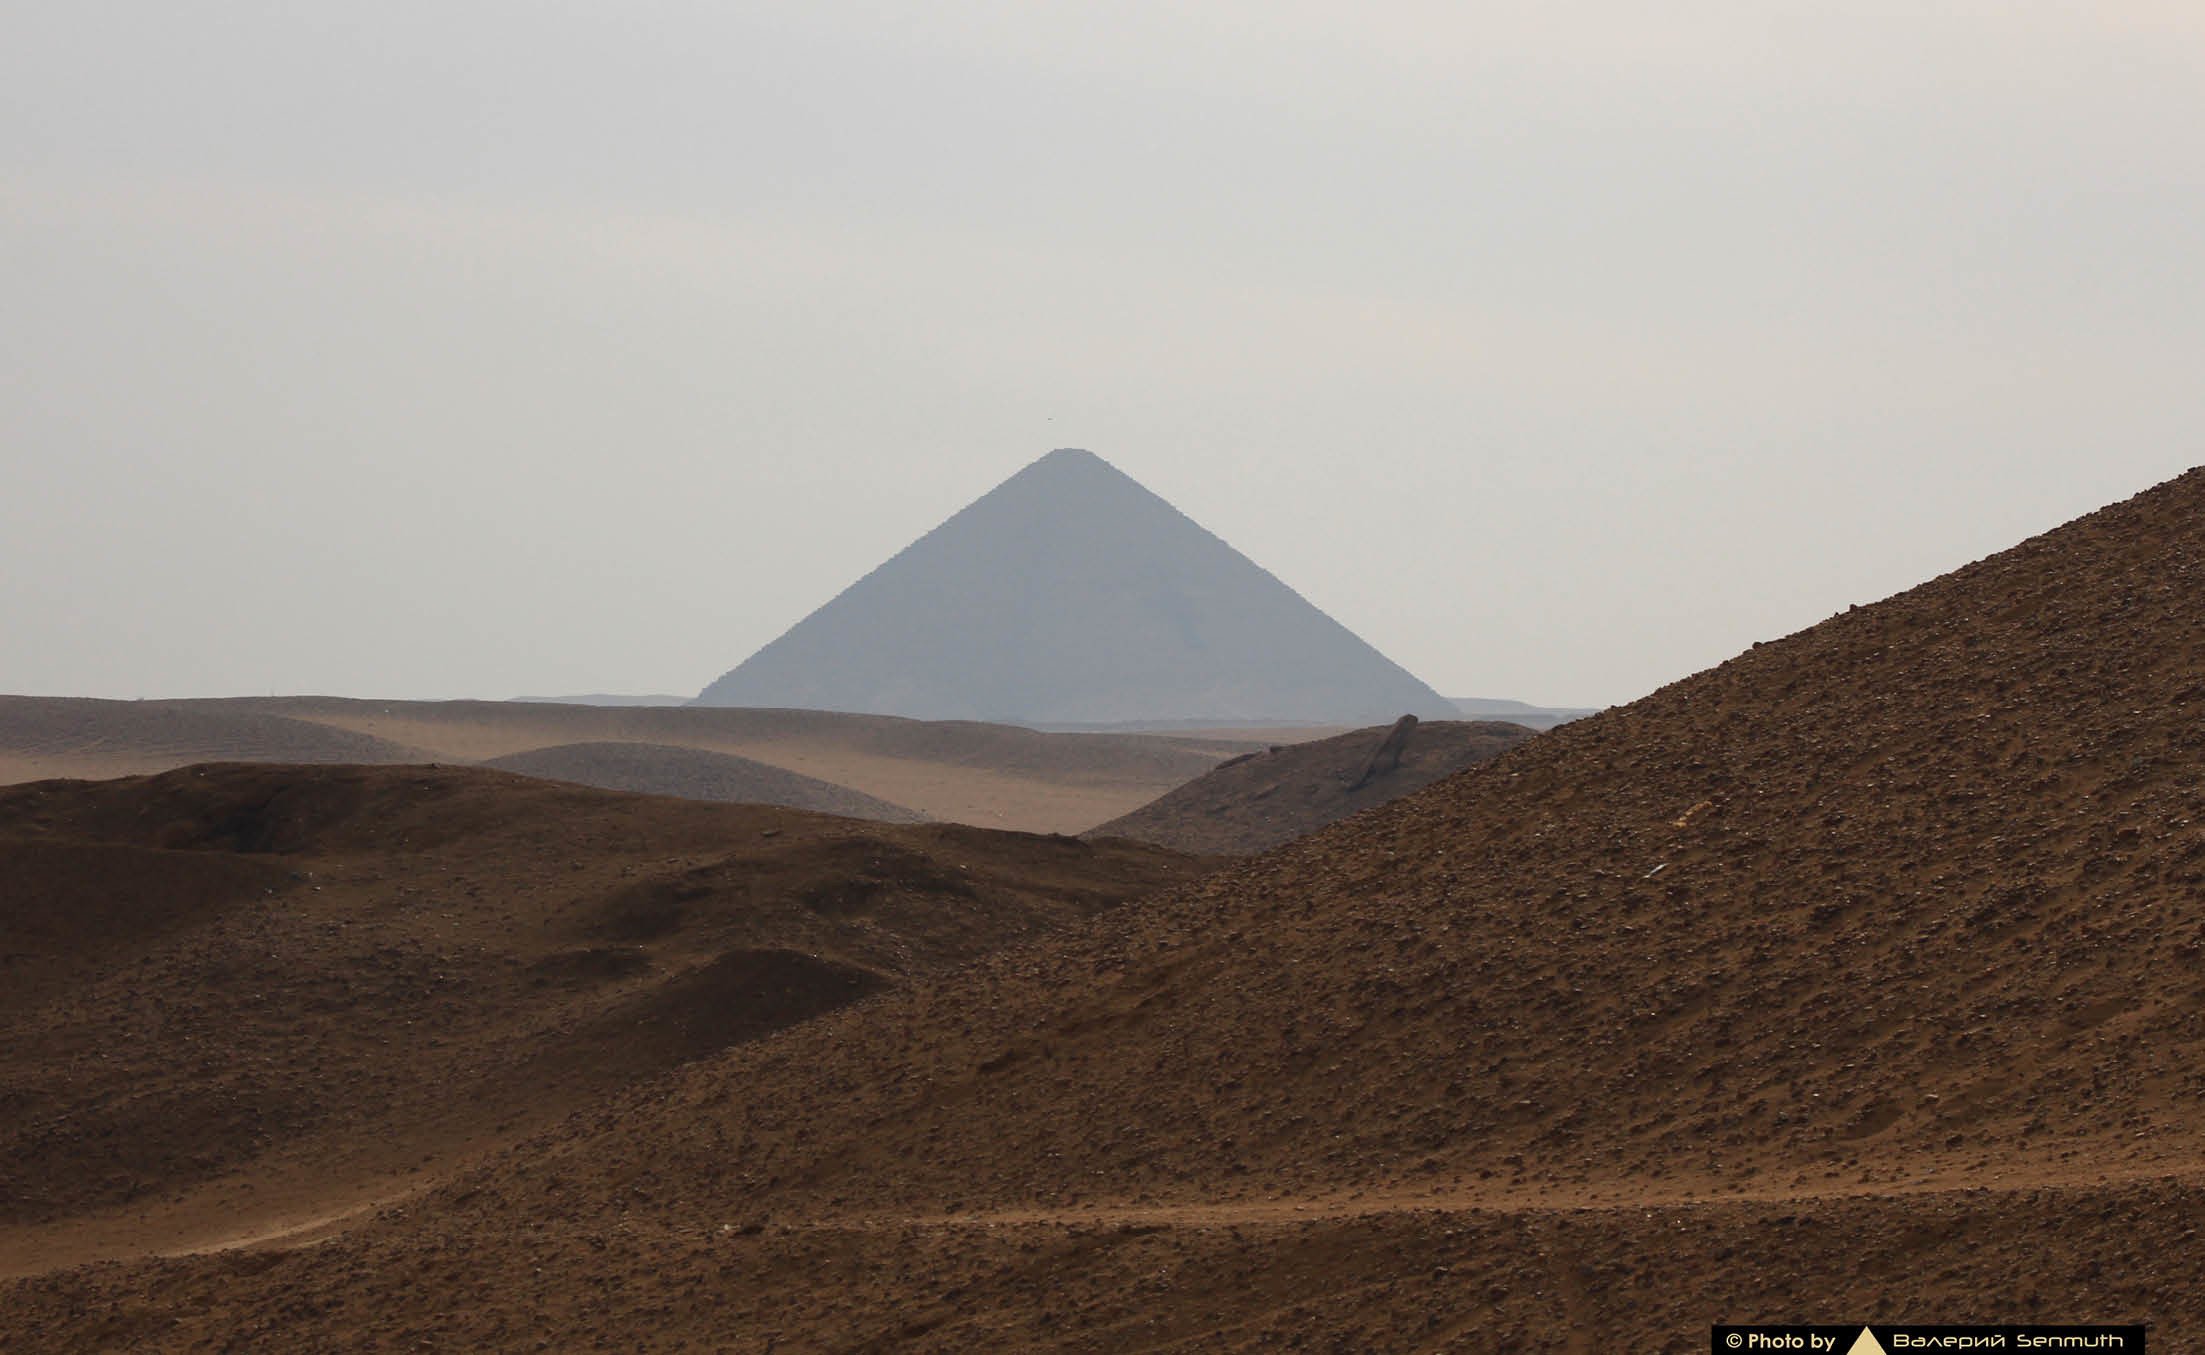 Пирамида снофру 220 104 11. Дахшурские пирамиды. Южная пирамида Дахшурского некрополя. Пирамида в Северной Дакоте. Северная Корея пирамида.